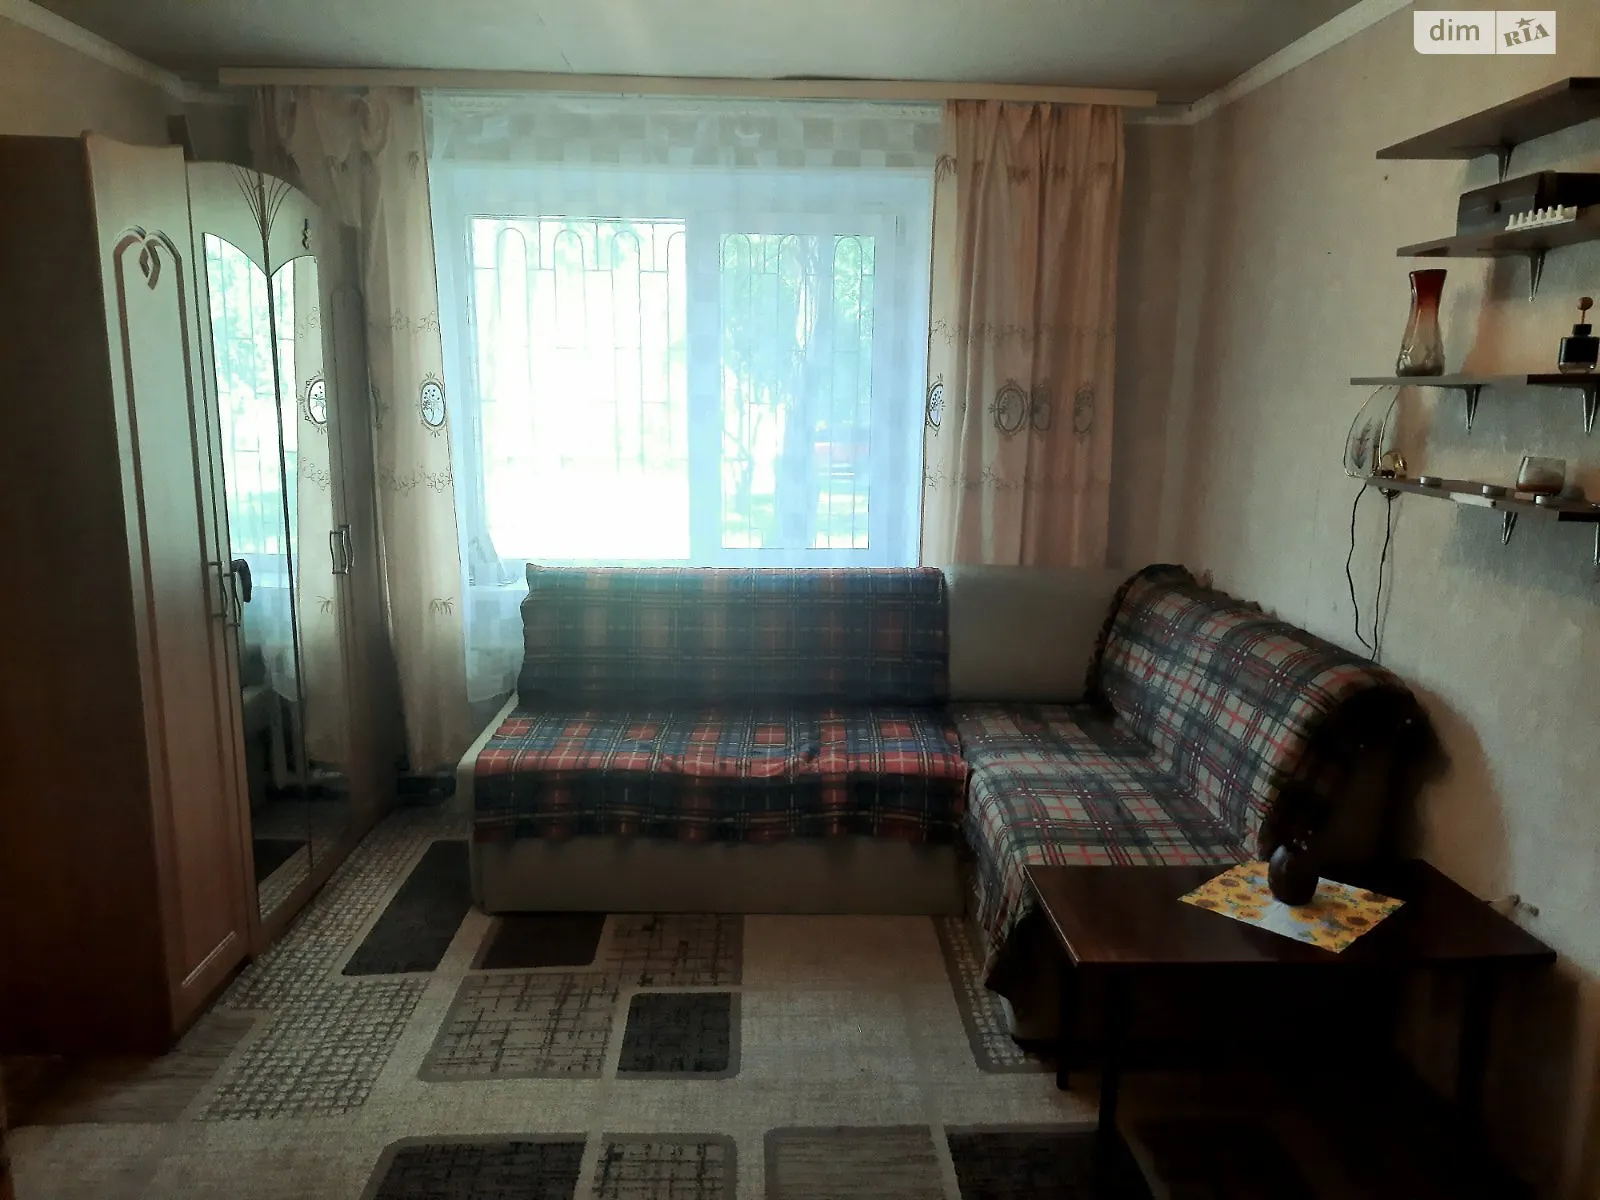 Продается комната 45 кв. м в Киеве, цена: 21000 $ - фото 1